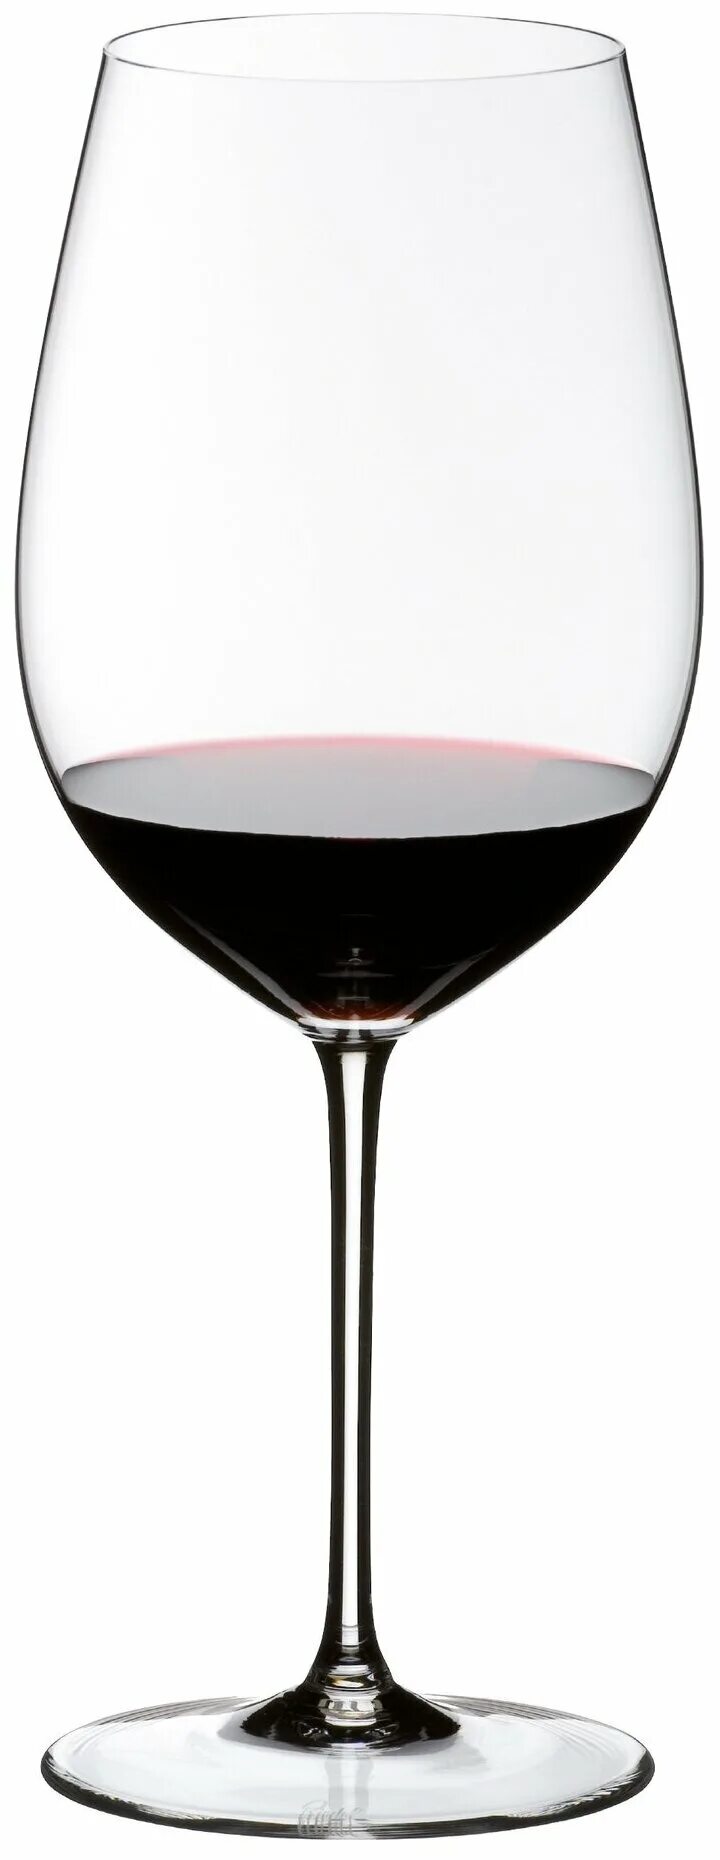 Riedel бокал для вина Sommeliers Bordeaux Grand Cru 4400/00 860 мл. Riedel бокал для вина fatto a mano Riesling/Zinfandel 4900/15 395 мл. Riedel бокал для вина veritas Cabernet/Merlot 1449/0 625 мл. Riedel бокал для вина Sommeliers Black Tie Hermitage 4100/30 590 мл.